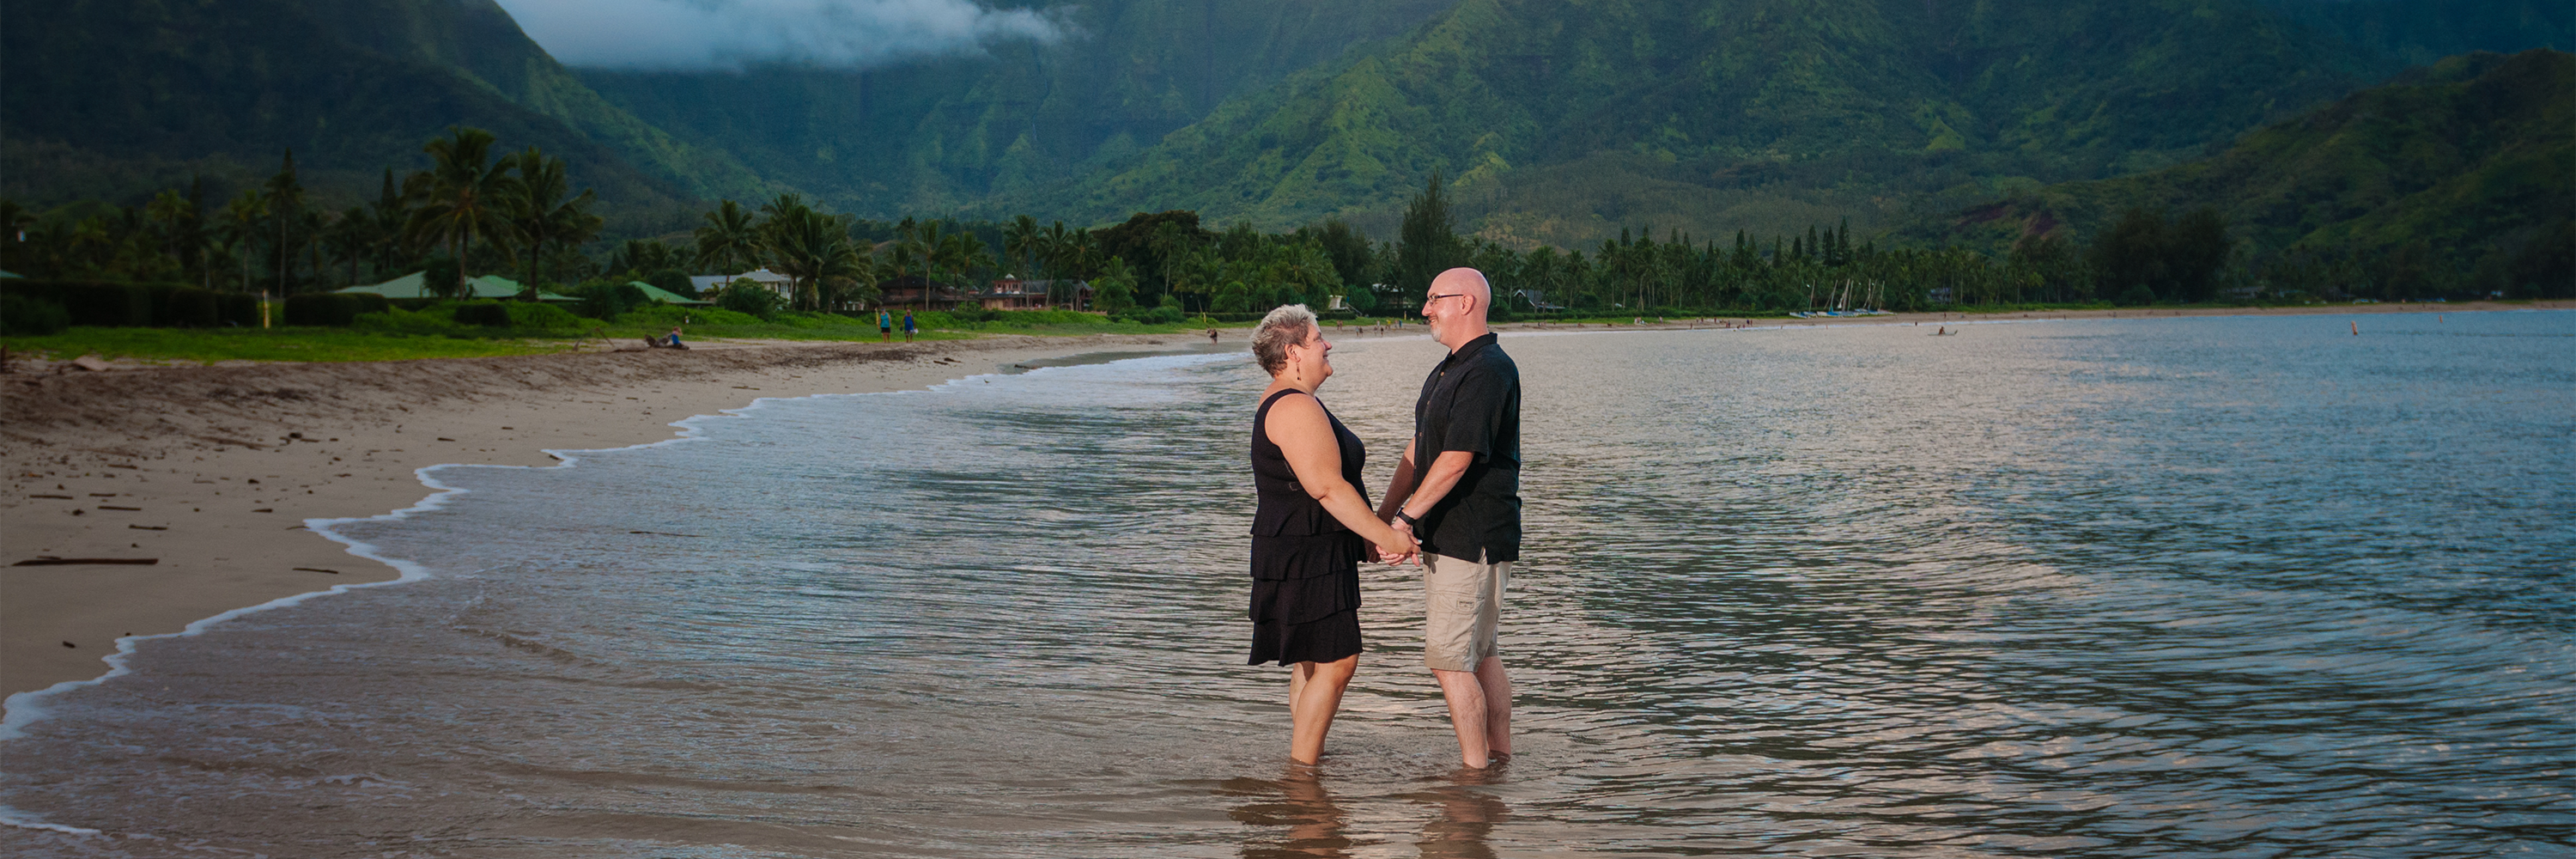 Cherie and her husband on a beach in Kauai